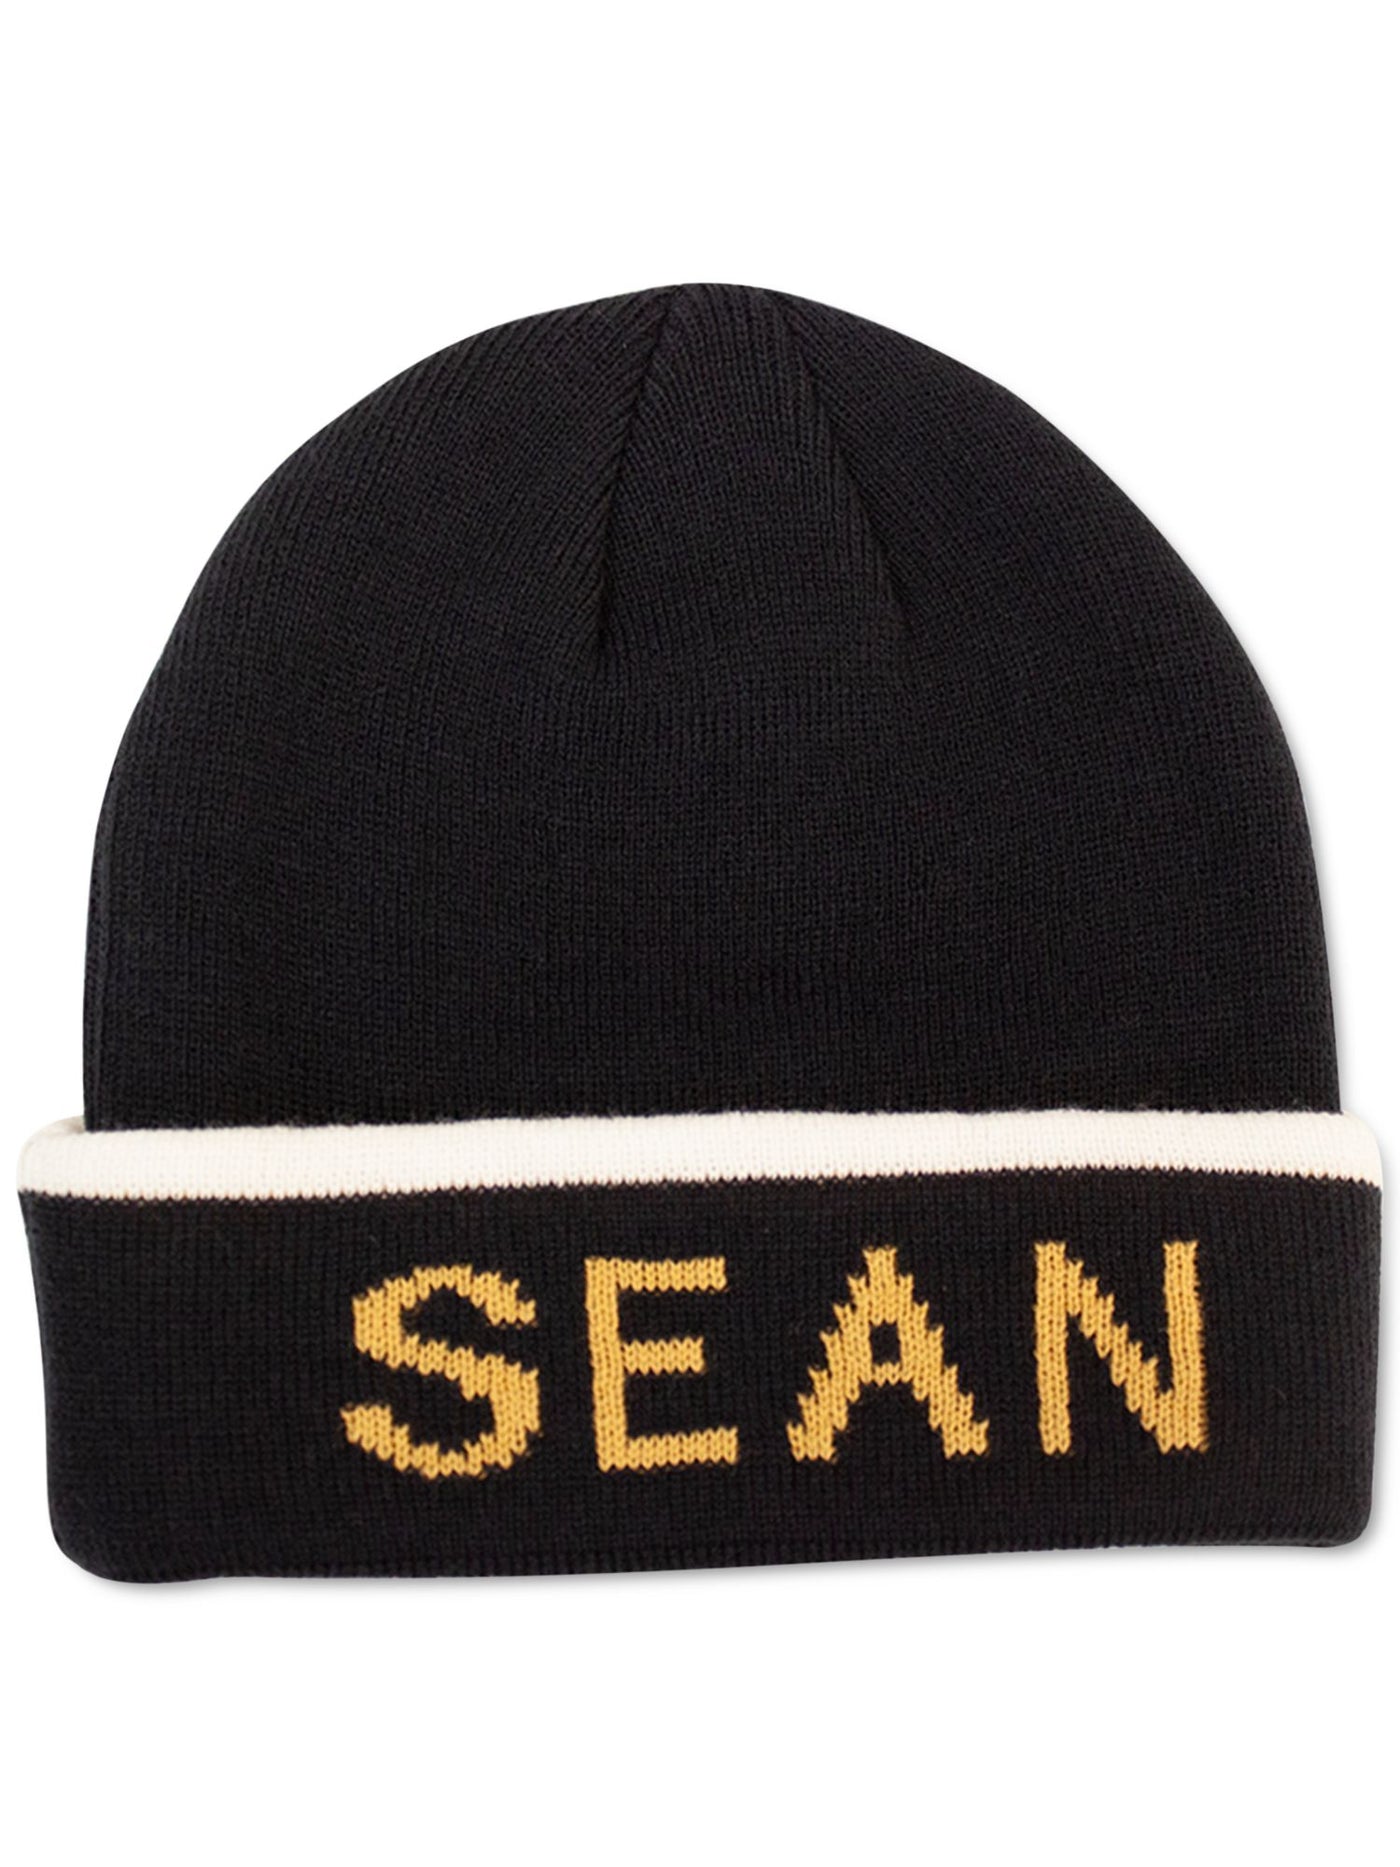 SEANJOHN Mens Navy Logo Acrylic Fitted Winter Beanie Hat Cap